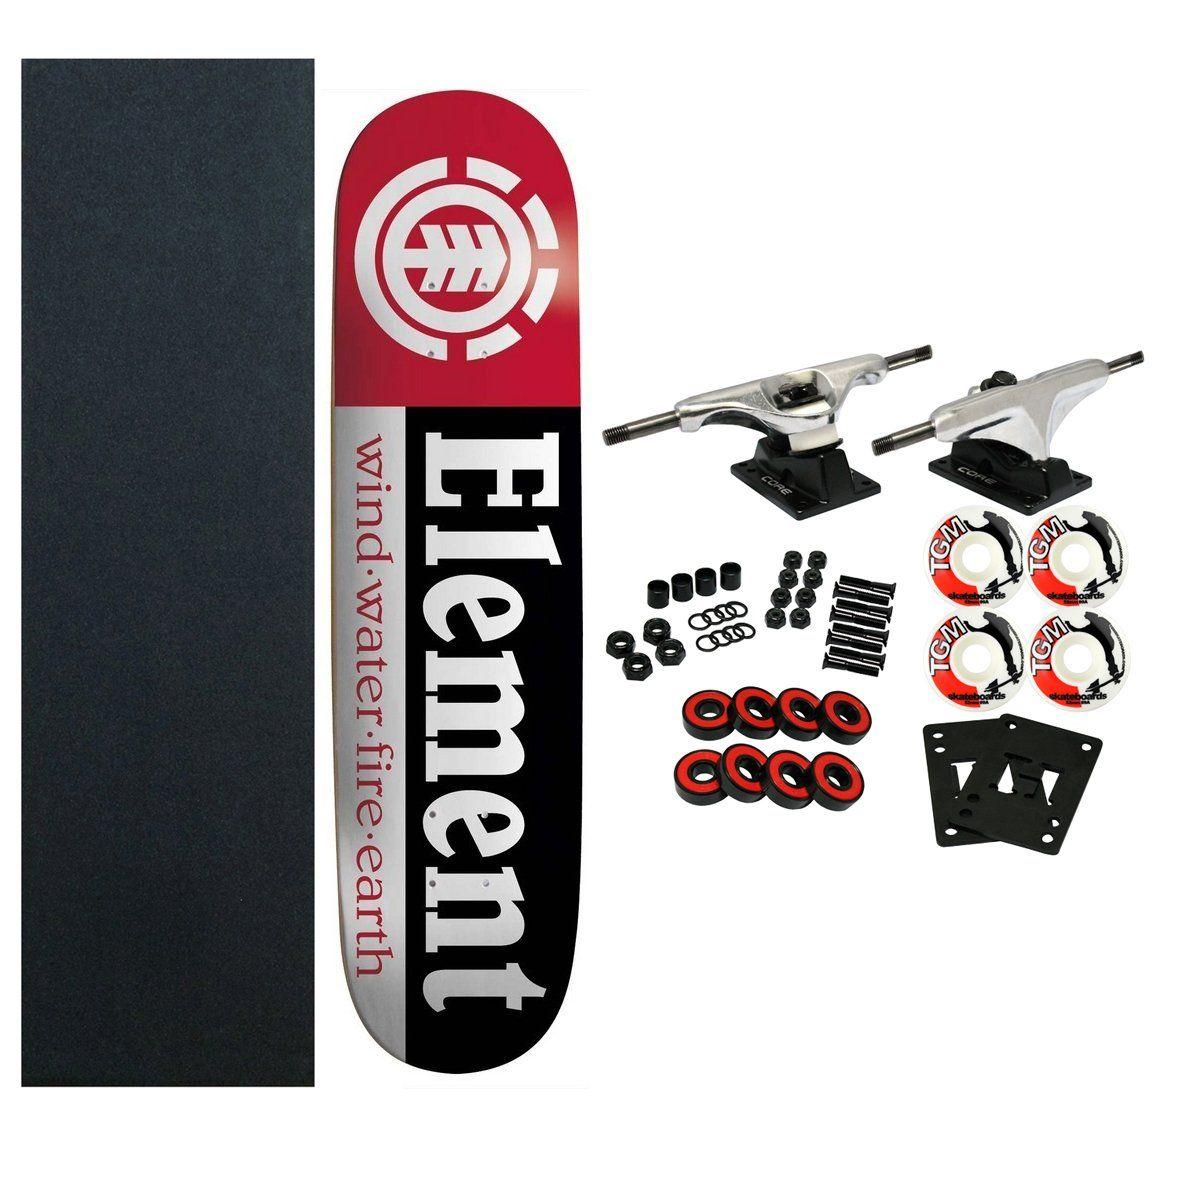 Element Skate Logo - Amazon.com : ELEMENT Skateboards SECTION Complete SKATEBOARD Black